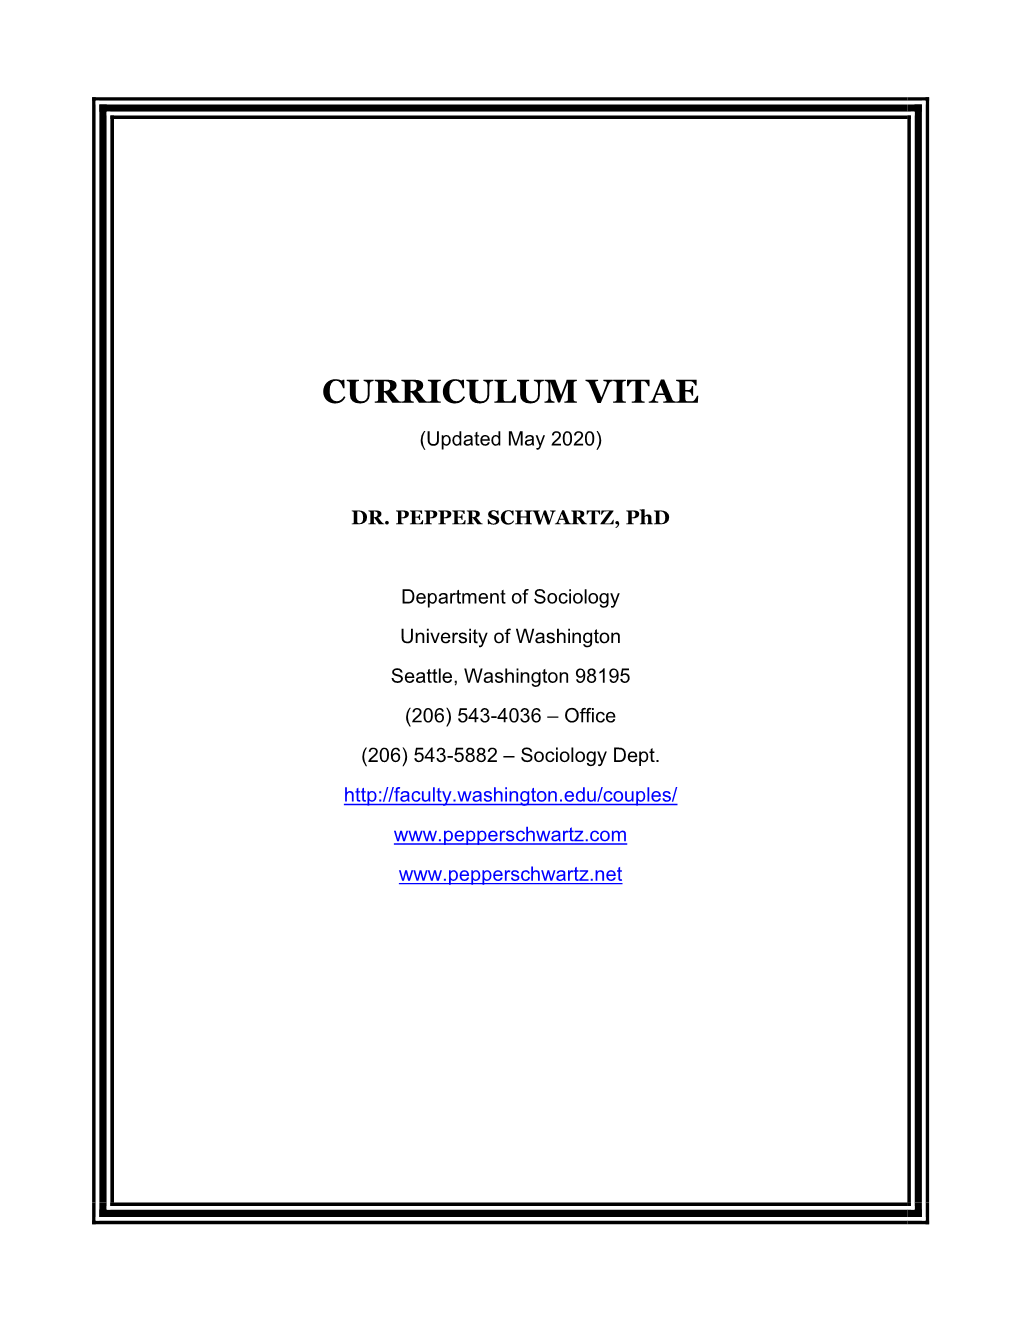 CURRICULUM VITAE (Updated May 2020)